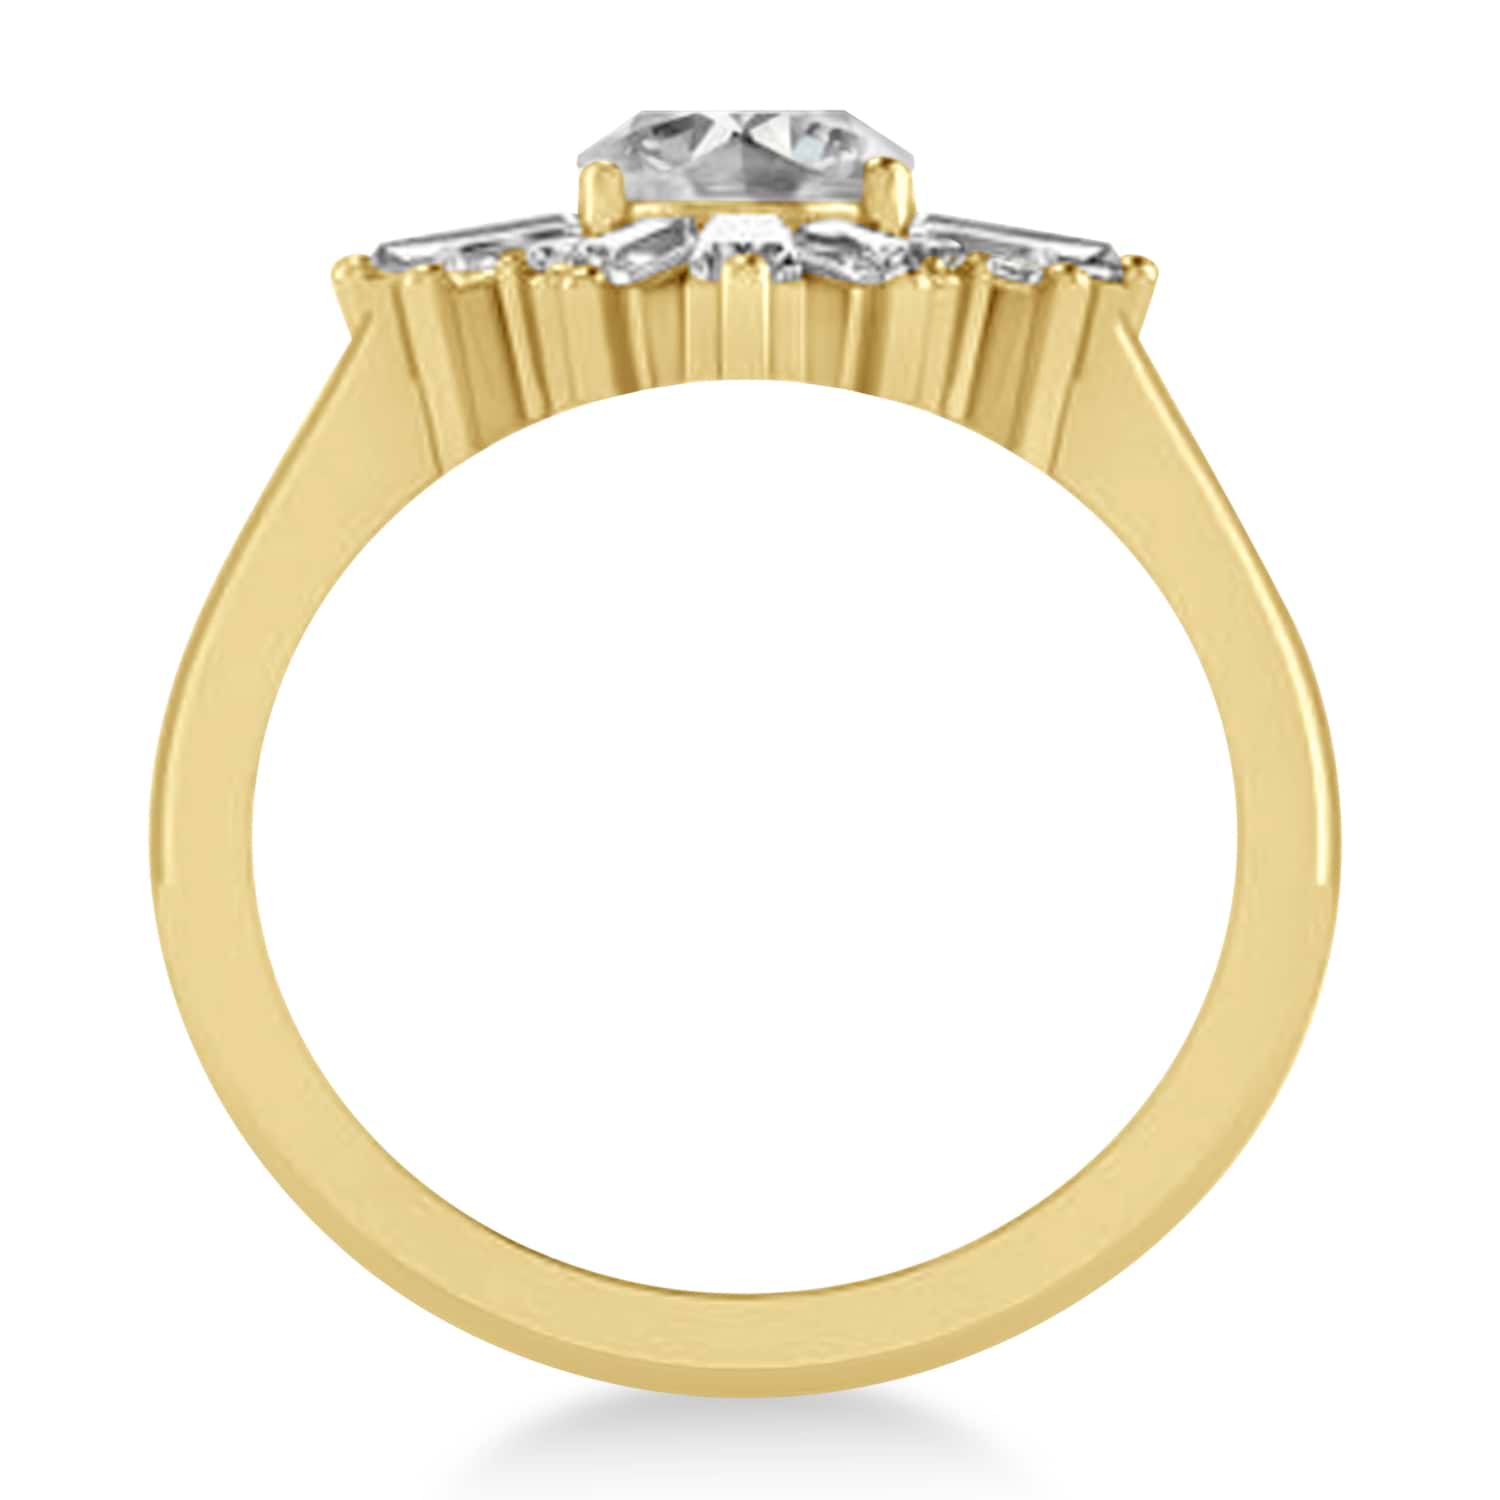 Diamond Oval Cut Ballerina Engagement Ring 14k Yellow Gold (2.51 ctw)